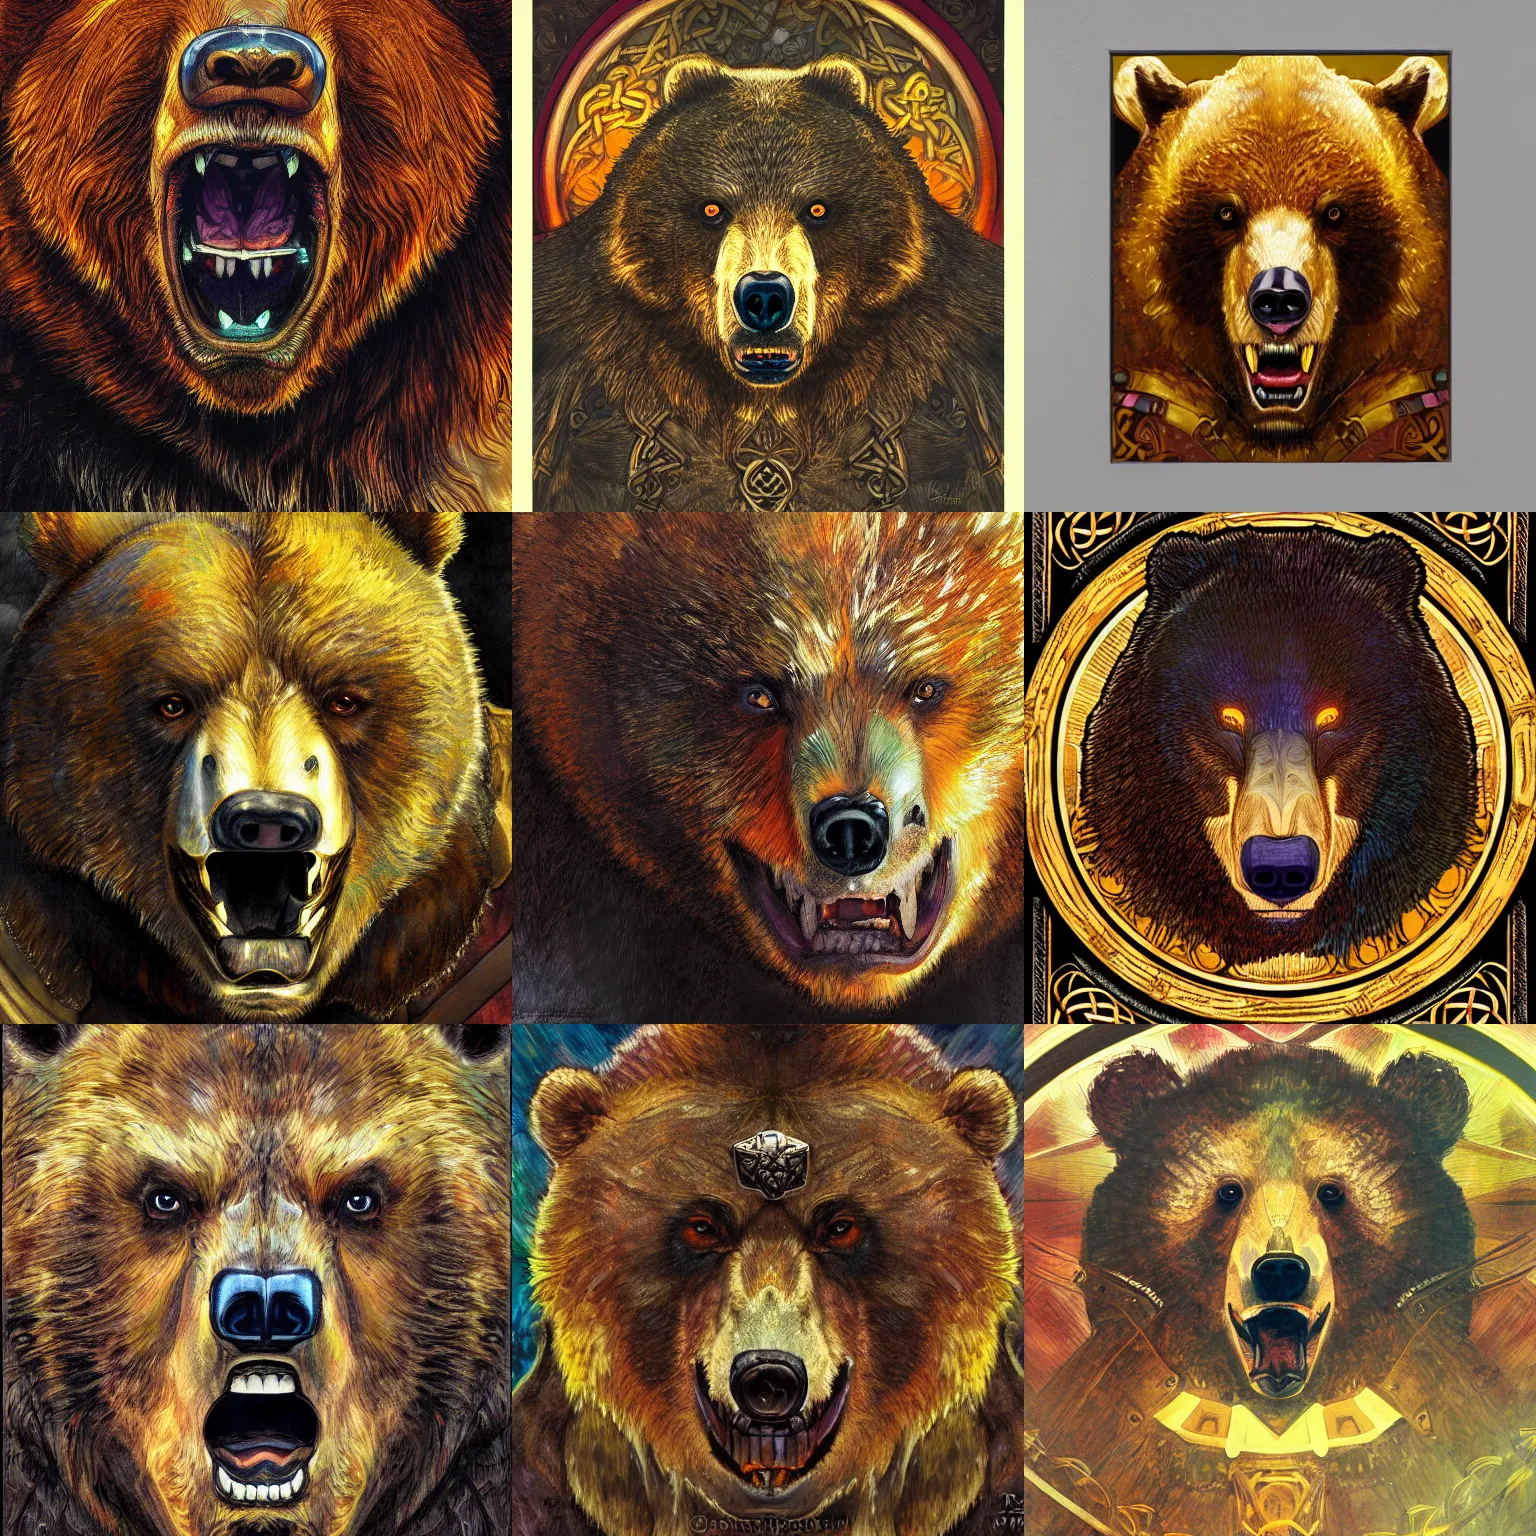 Prompt: portrait close - up of a growling angry bear, symetry, fantasy, digital painting, marvel comics, celtic golden symbols, rutkowski, alfons mucha